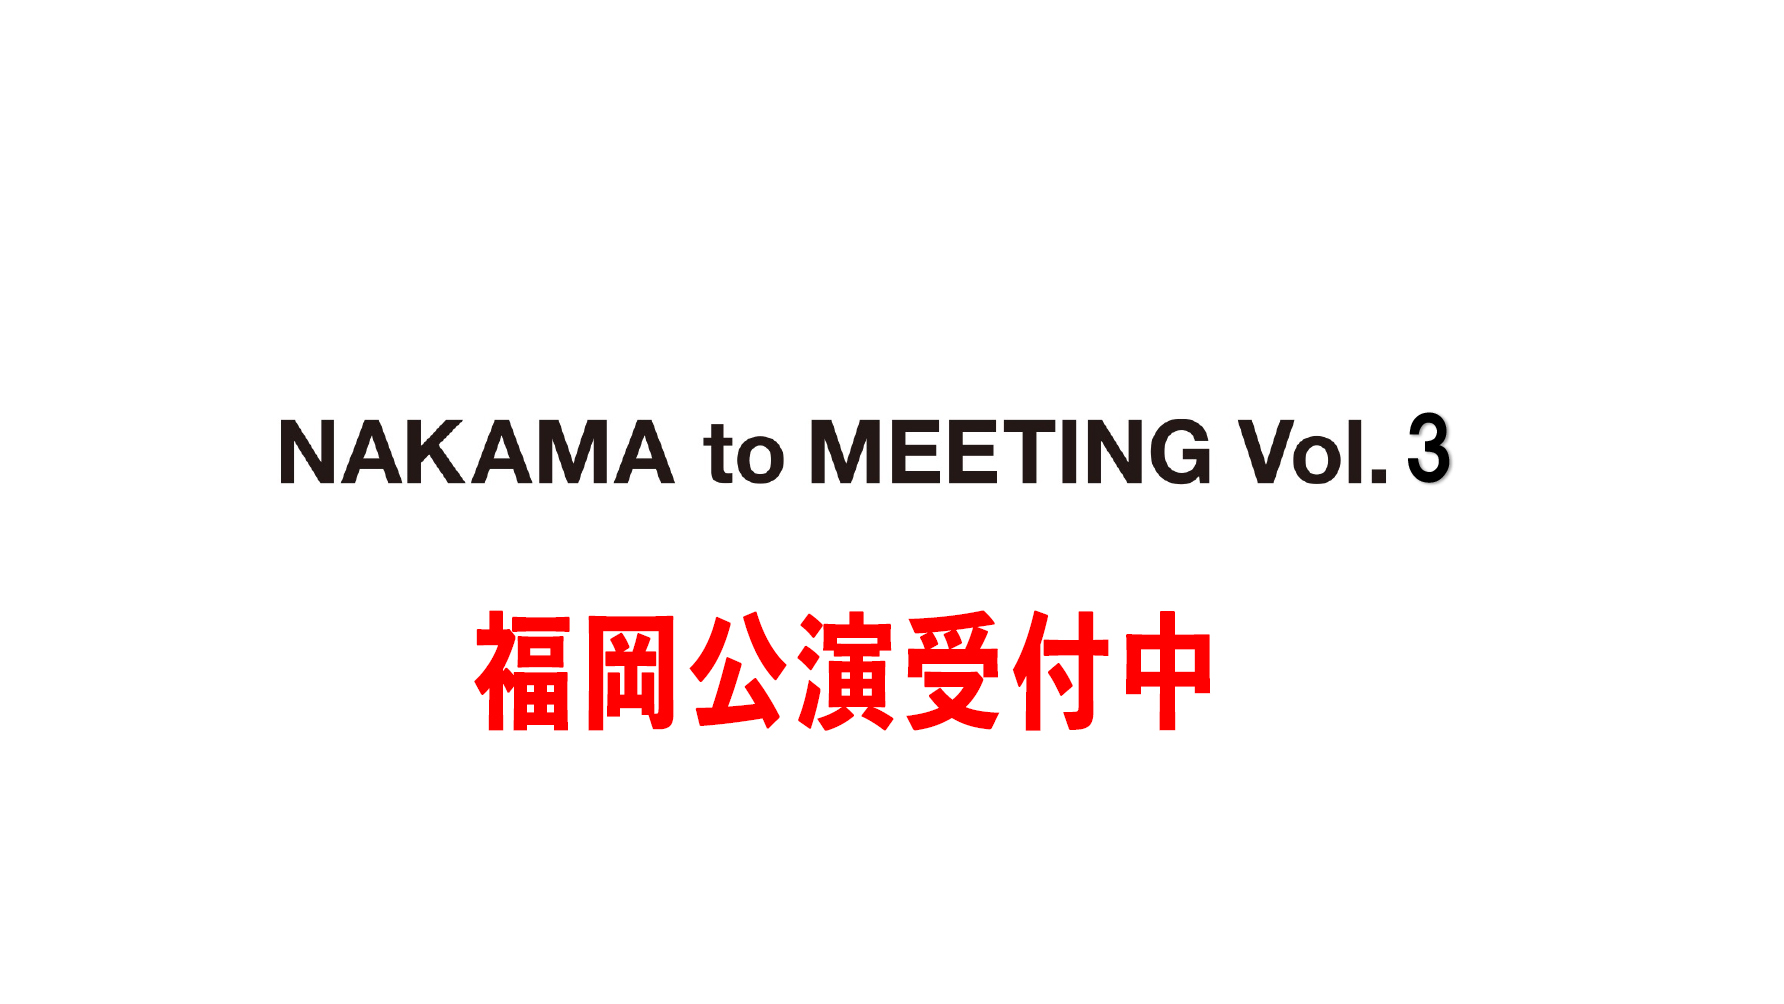 『NAKAMA to MEETING Vol.3』